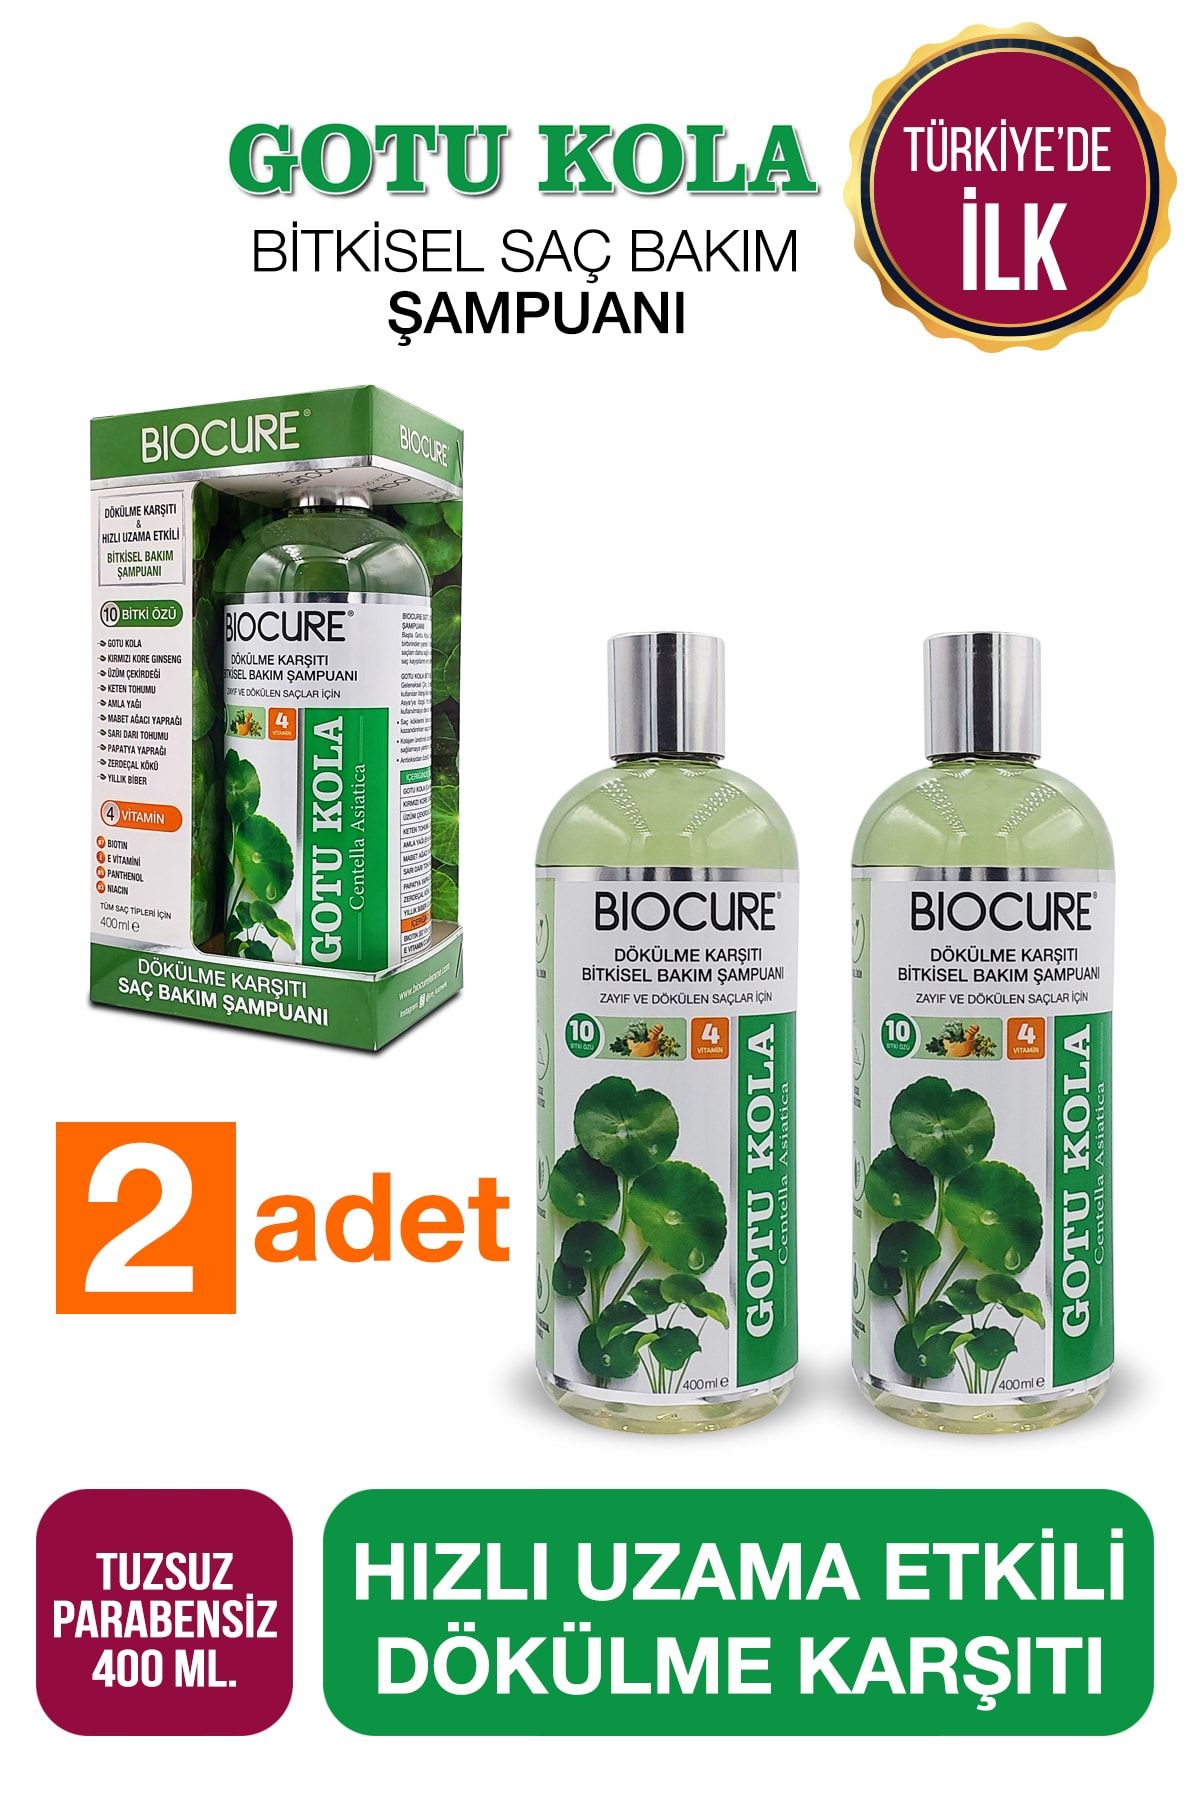 Biocure Gotu Kola Saç Dökülme Karşıtı Bitkisel Şampuan 10 Bitki 4 Vitaminli X 2 Adet